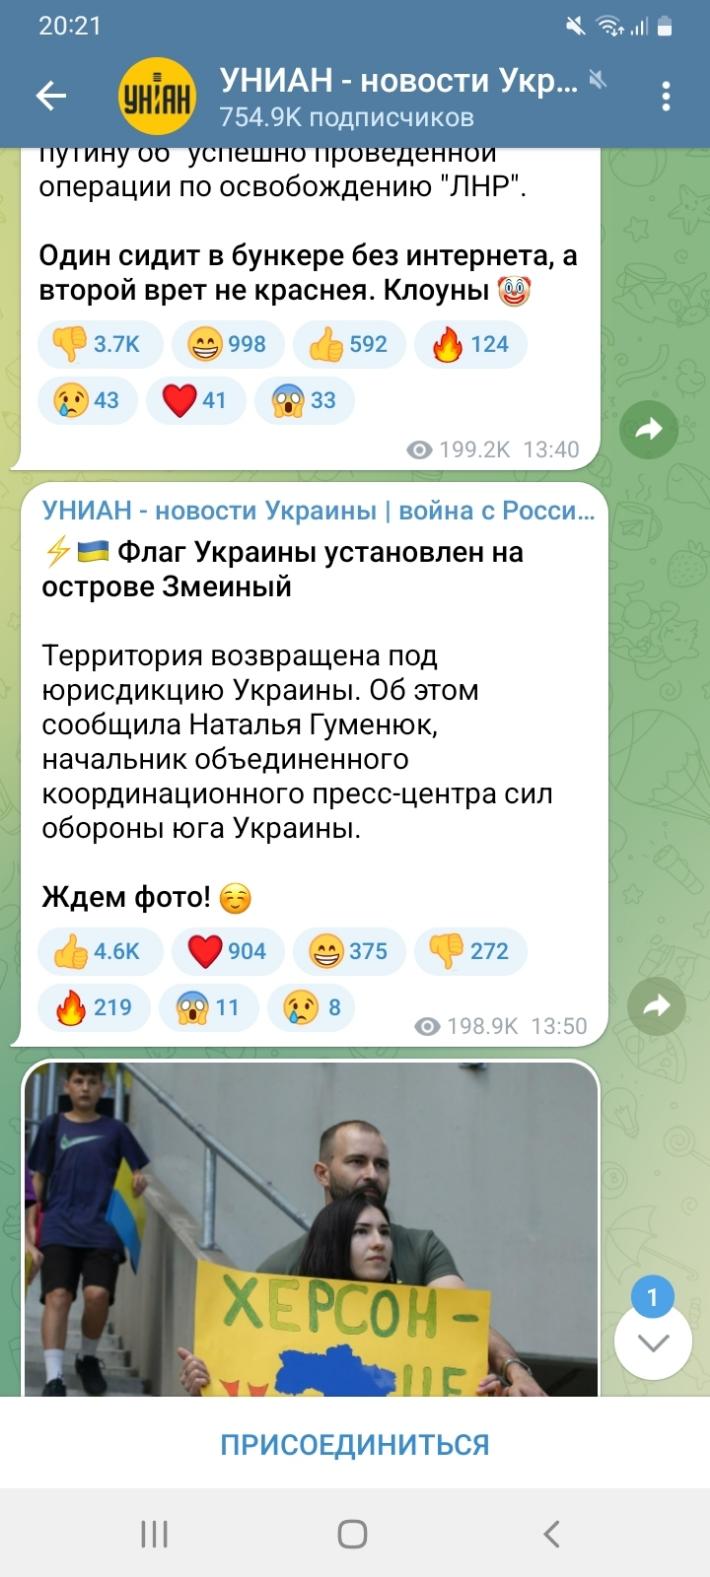 Униан телеграмм на русском сегодня фото 3